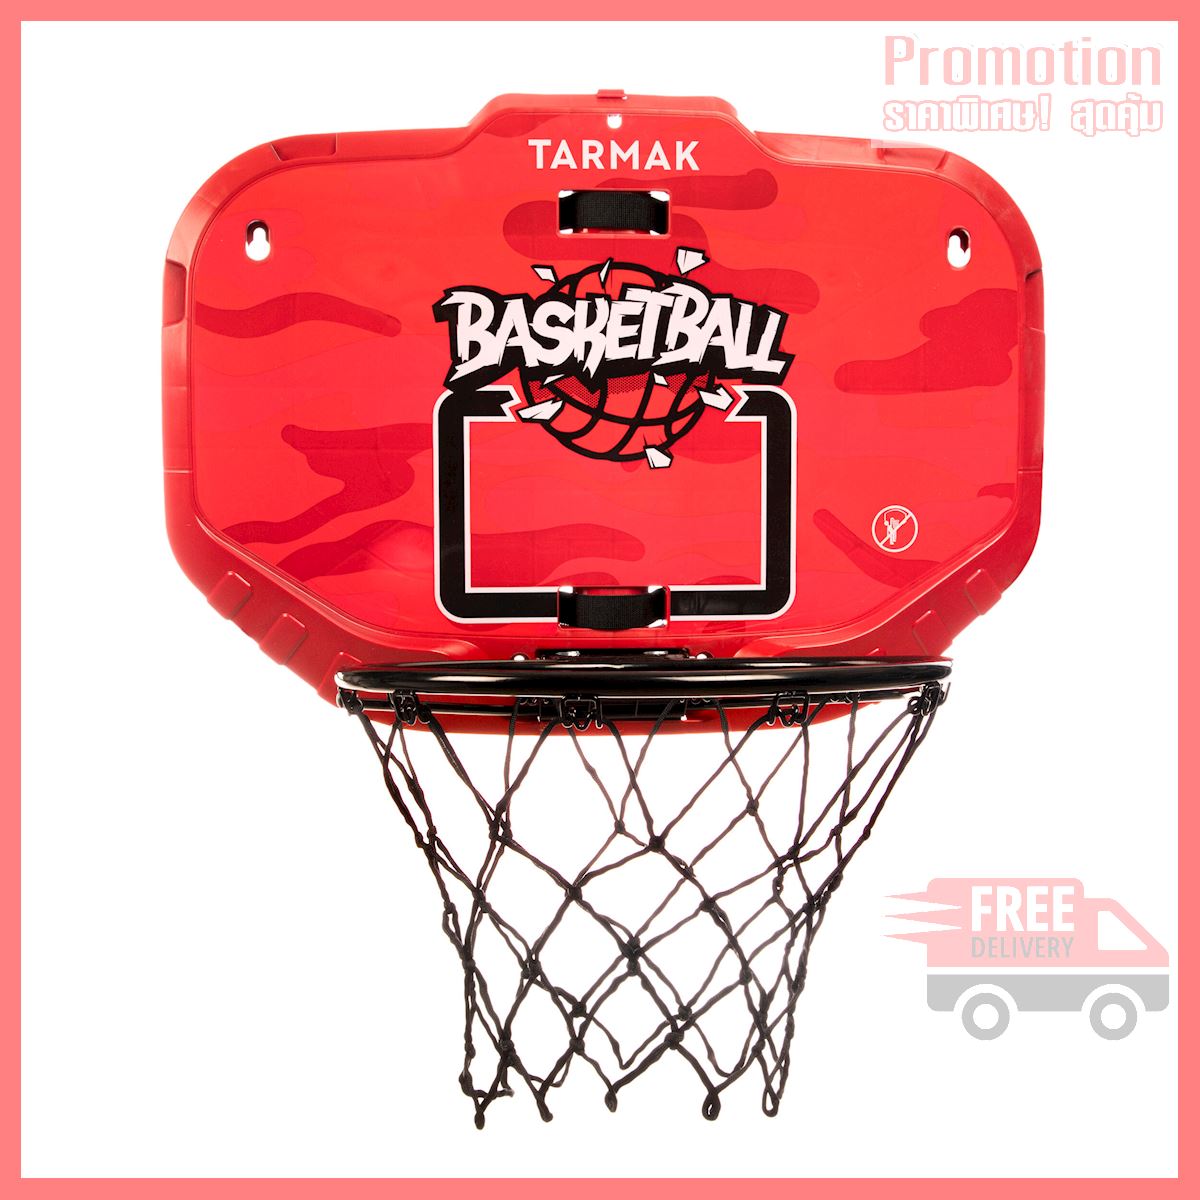 Kids'/Adult Basketball Hoop K900 - Red/Black. Transportable.